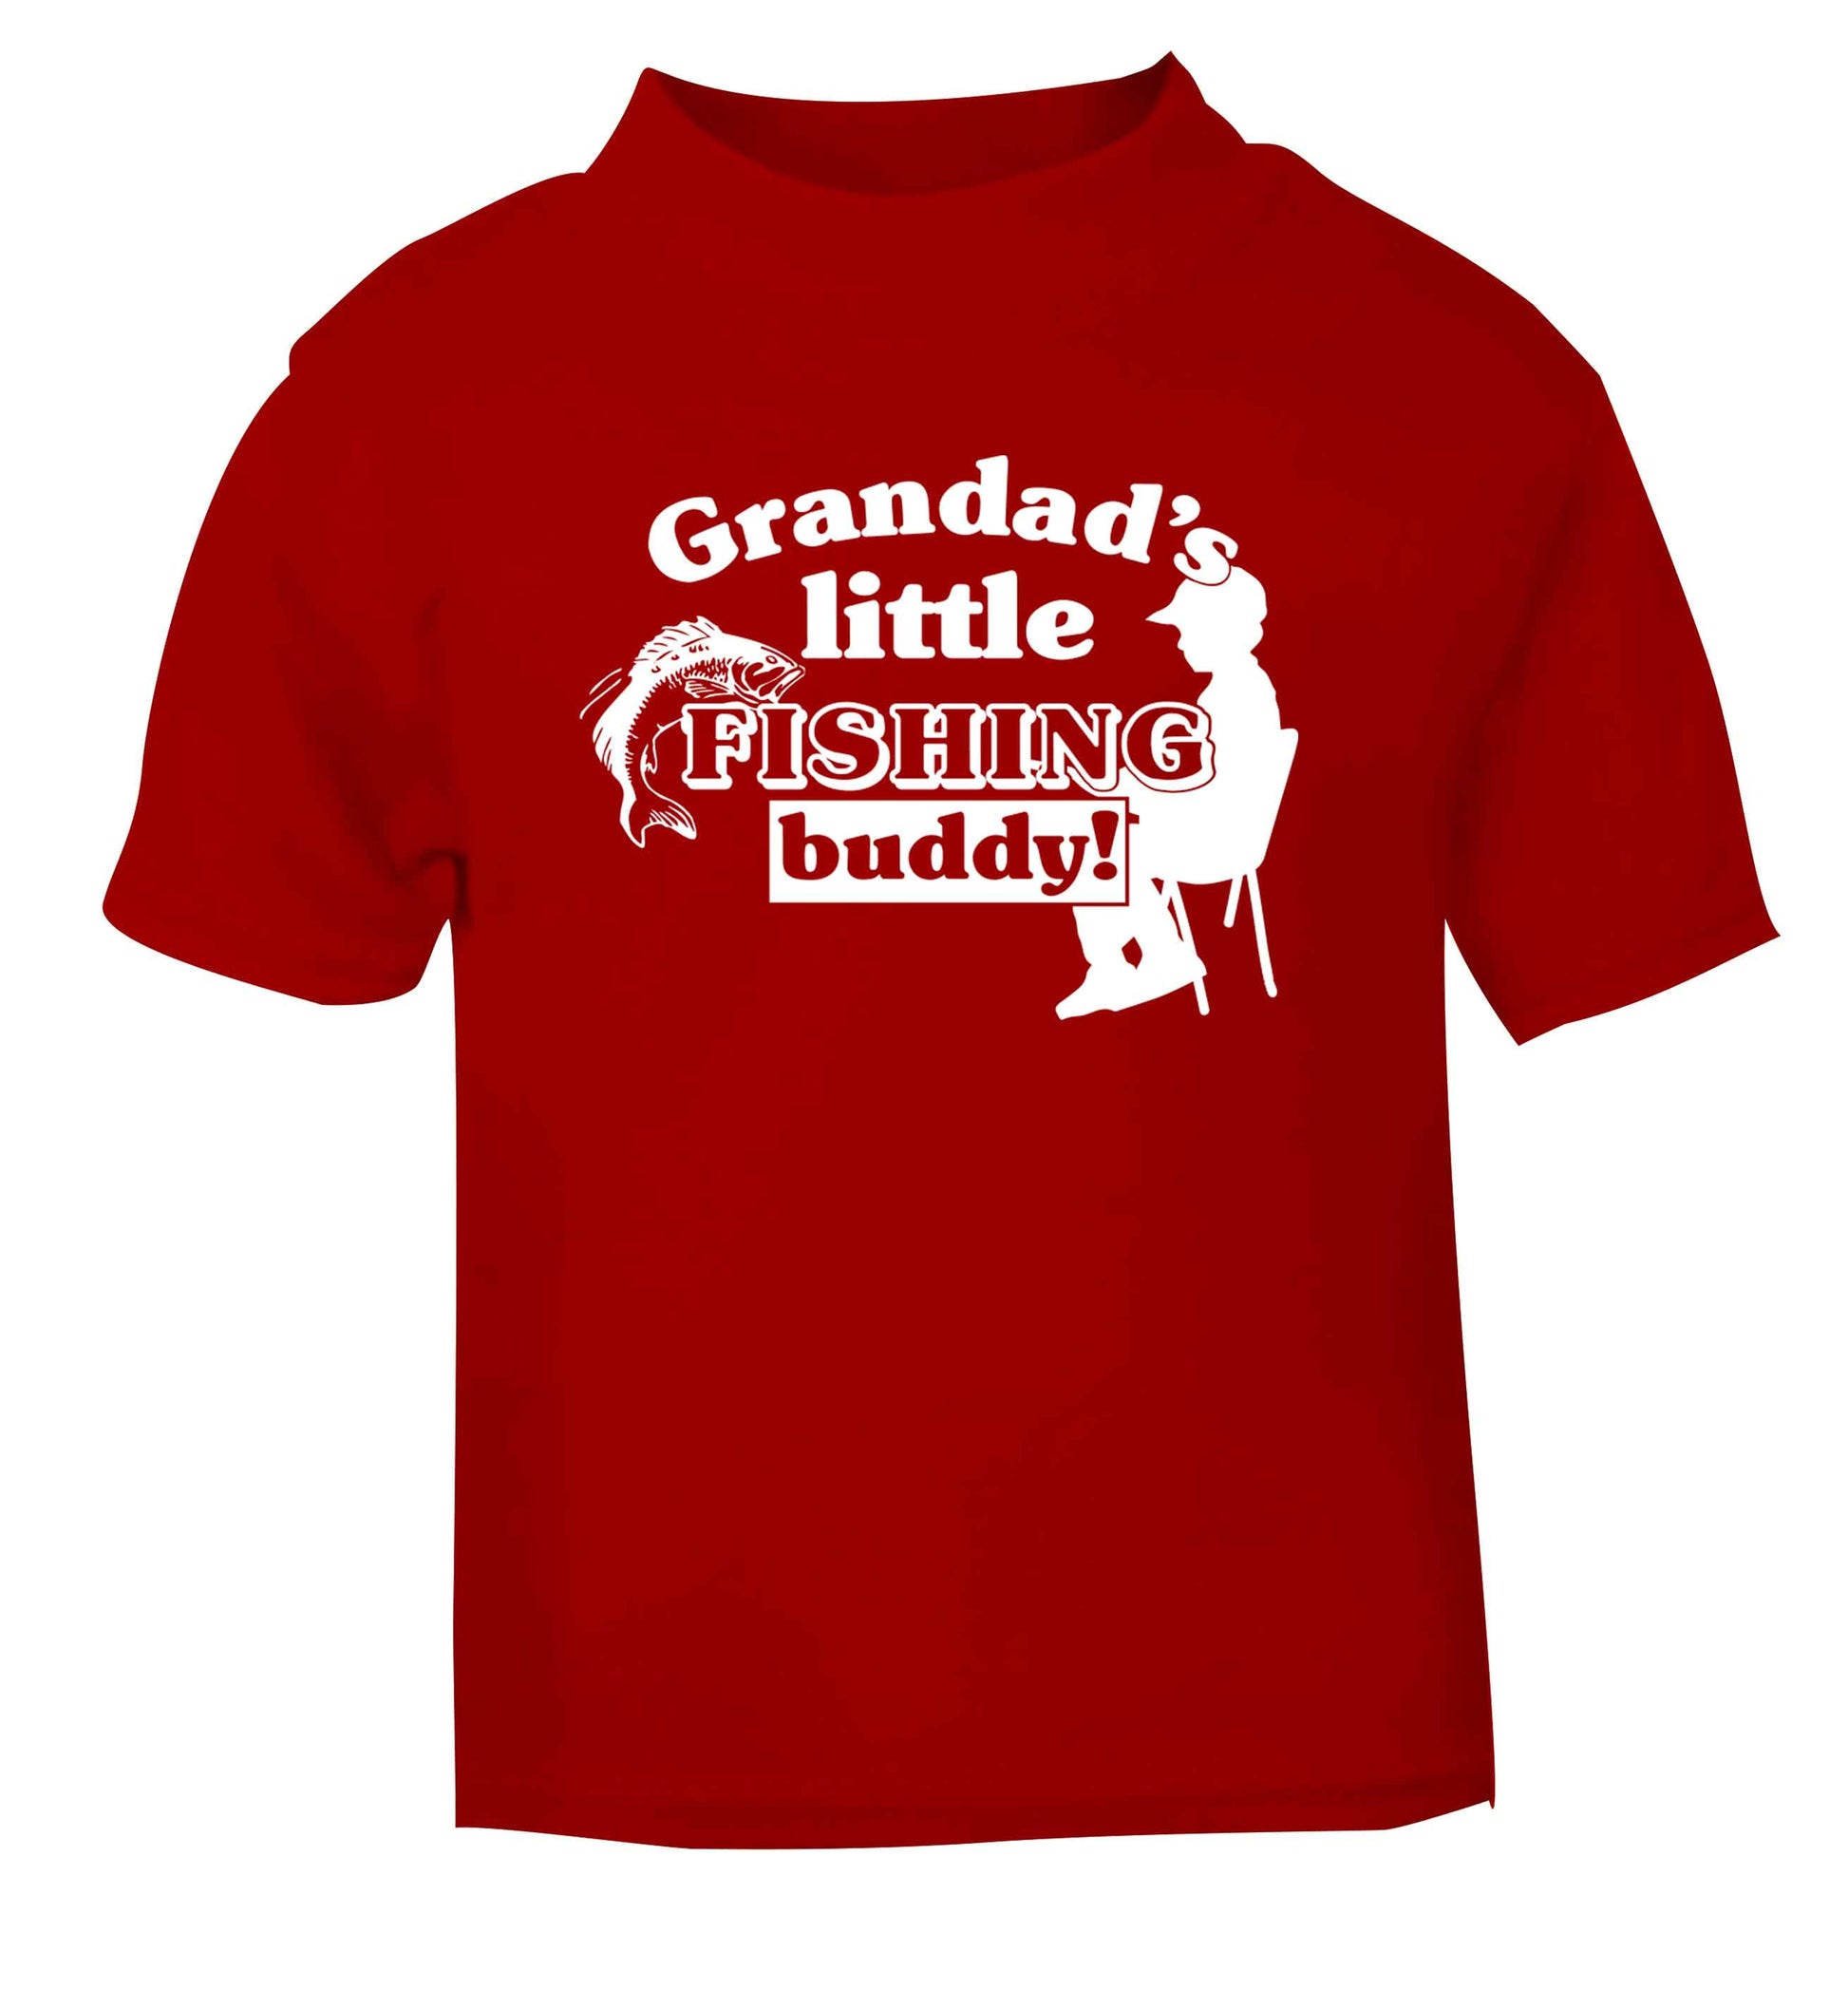 Grandad's little fishing buddy! red Baby Toddler Tshirt 2 Years